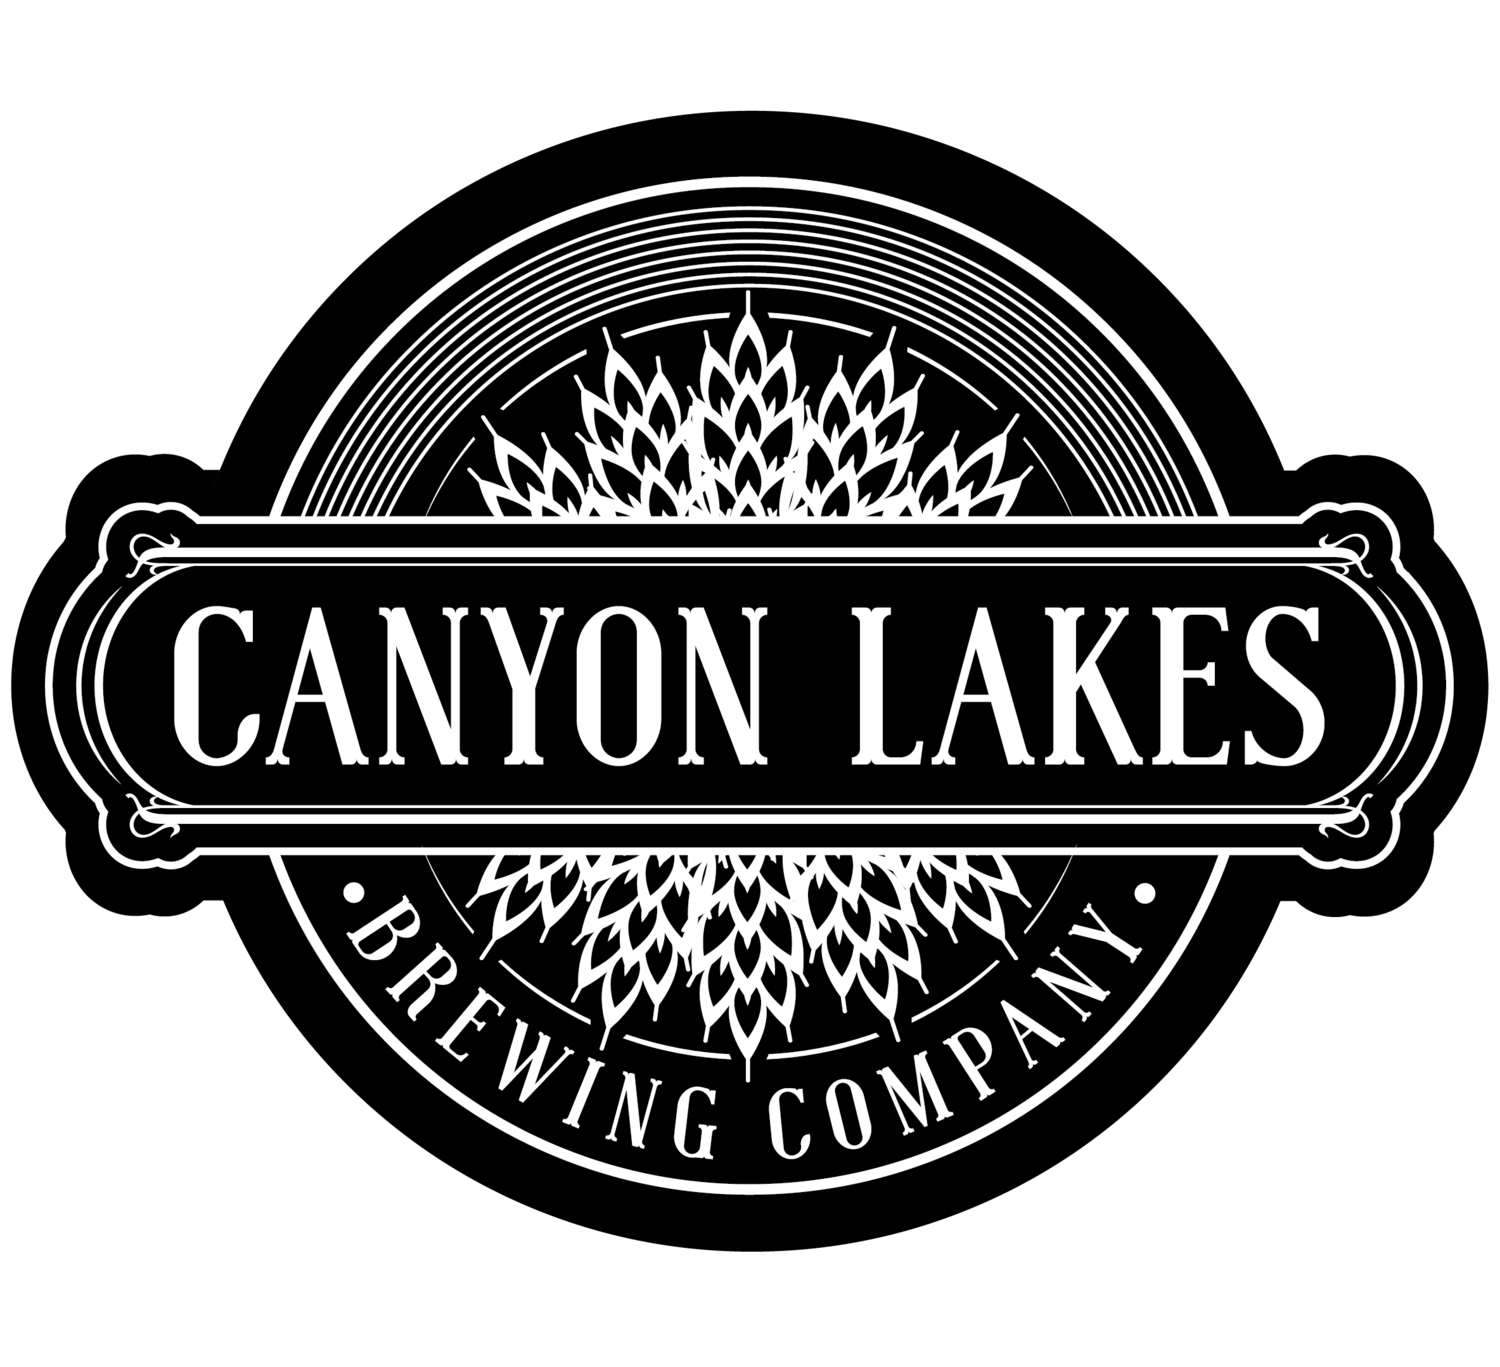 Canyon Lakes Brewing Company